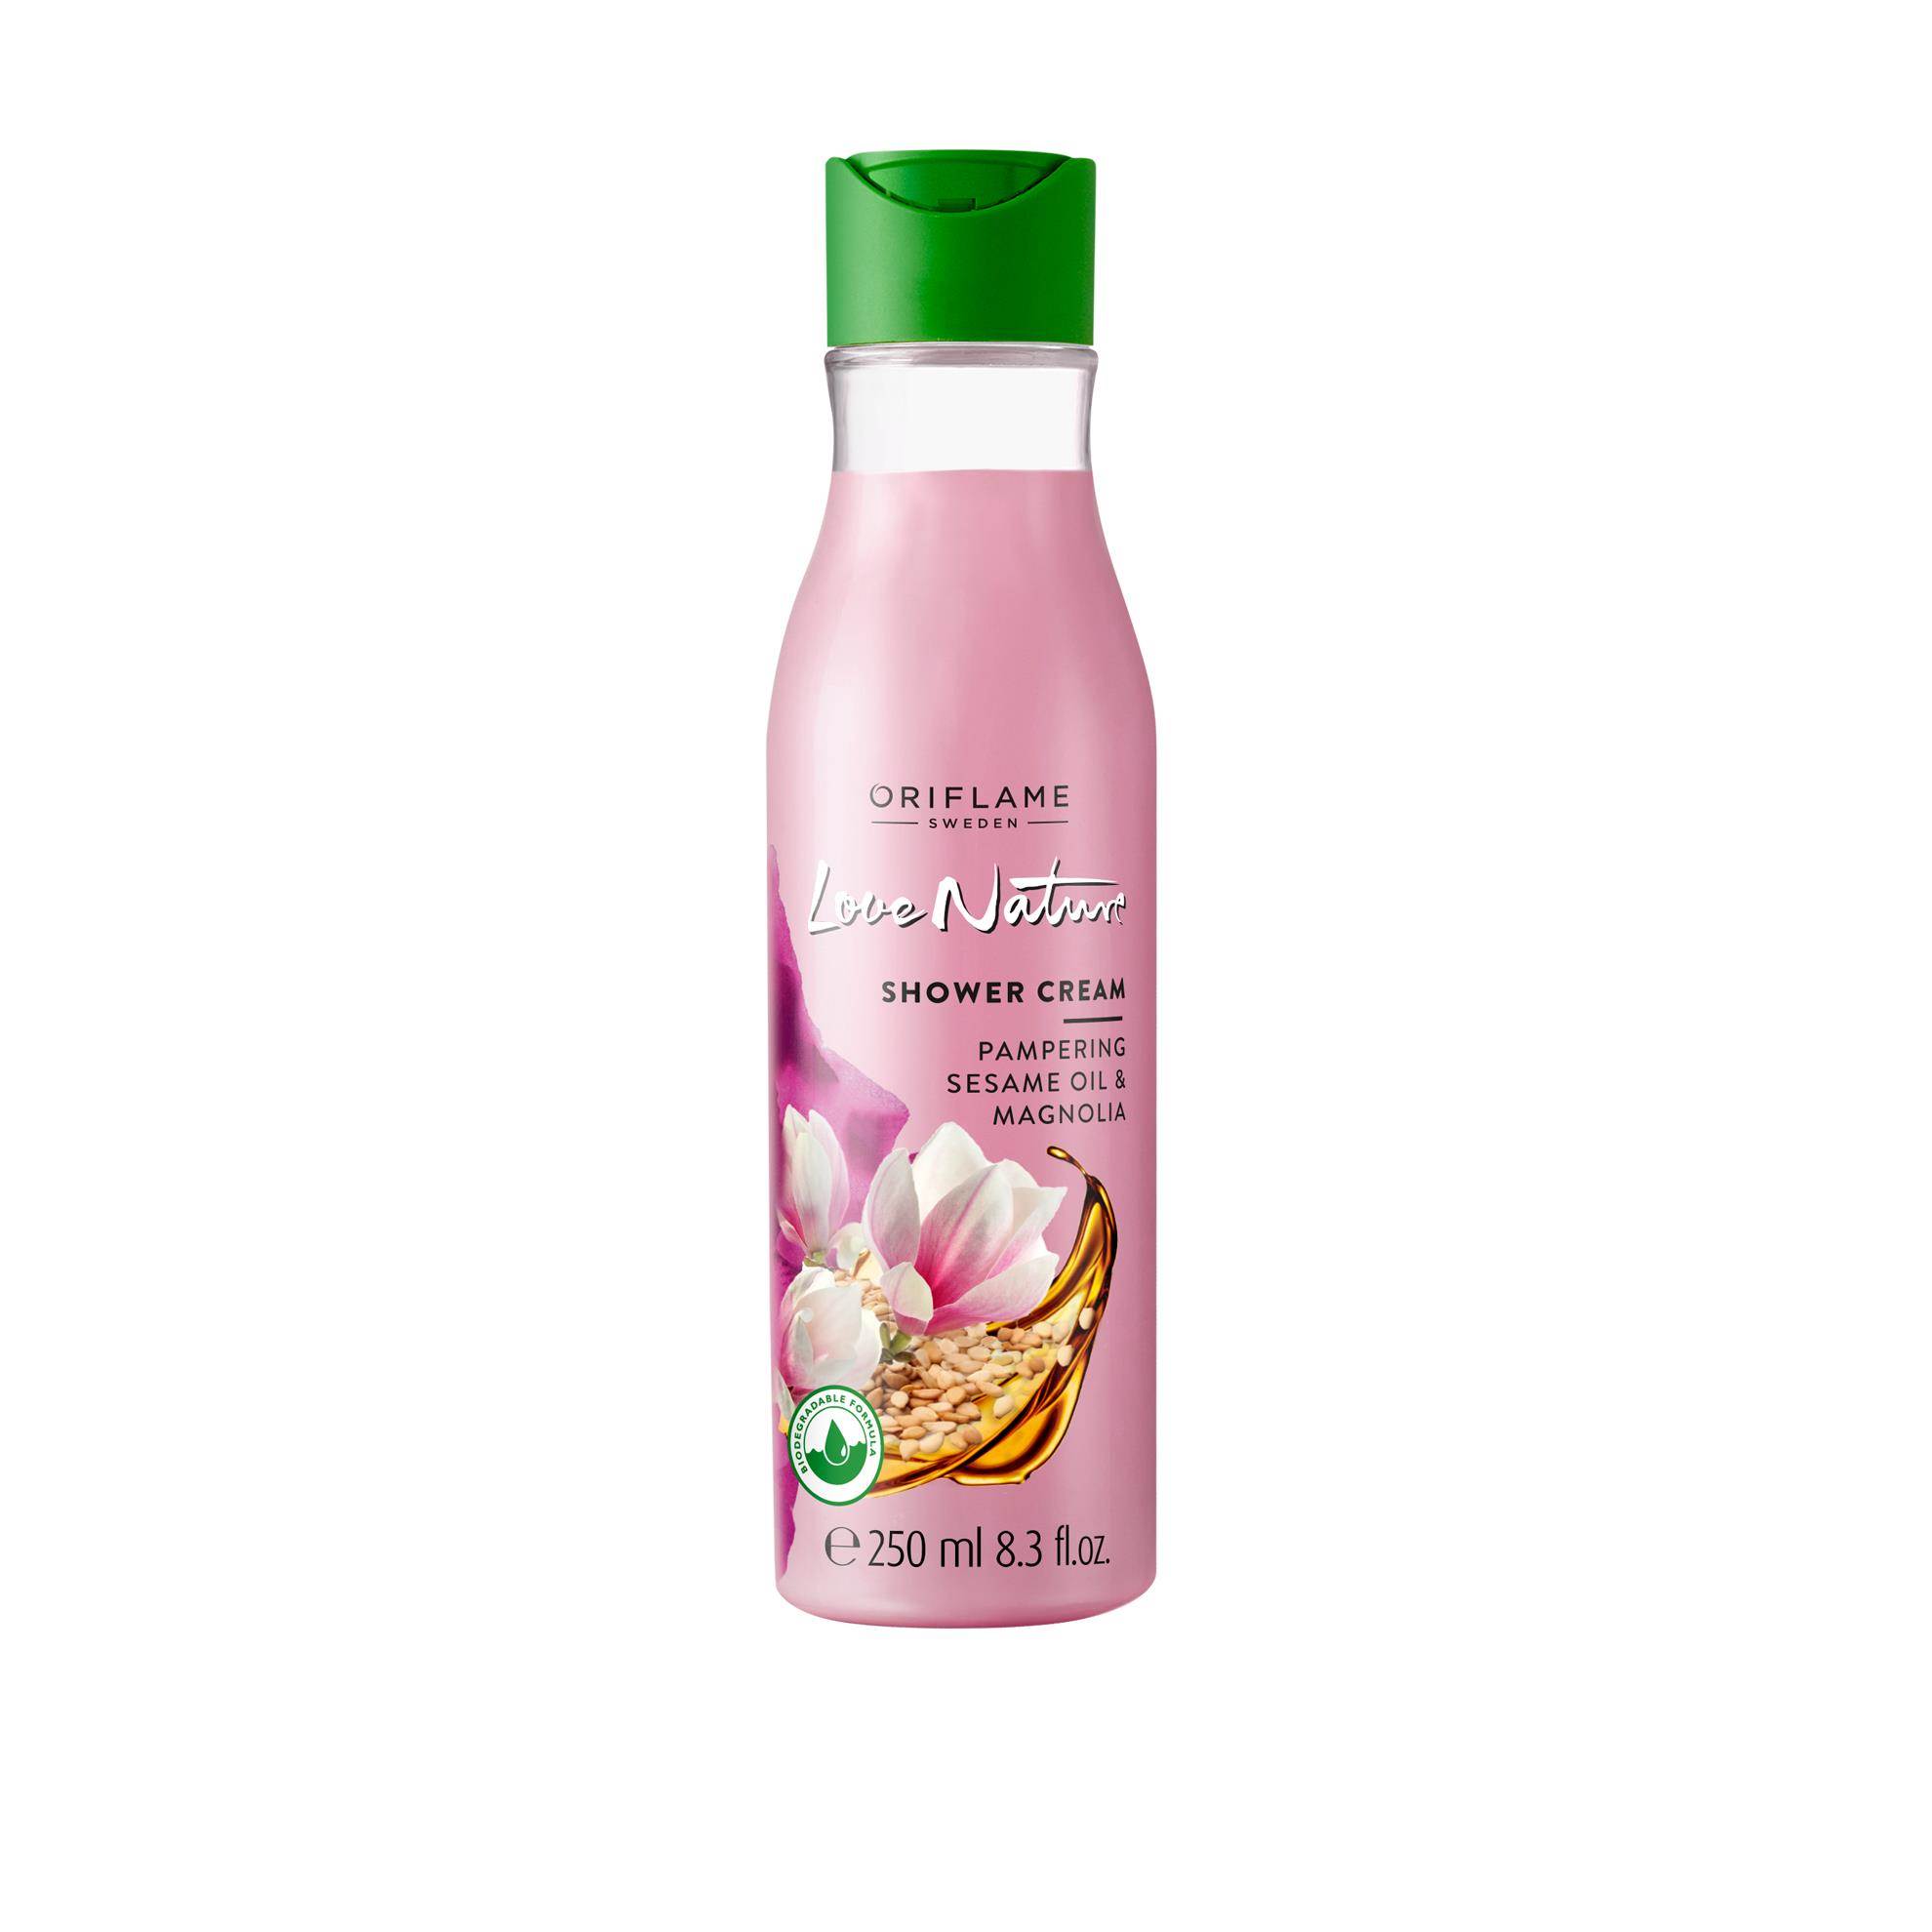 love-nature-shower-cream-pampering-sesame-oil-magnolia